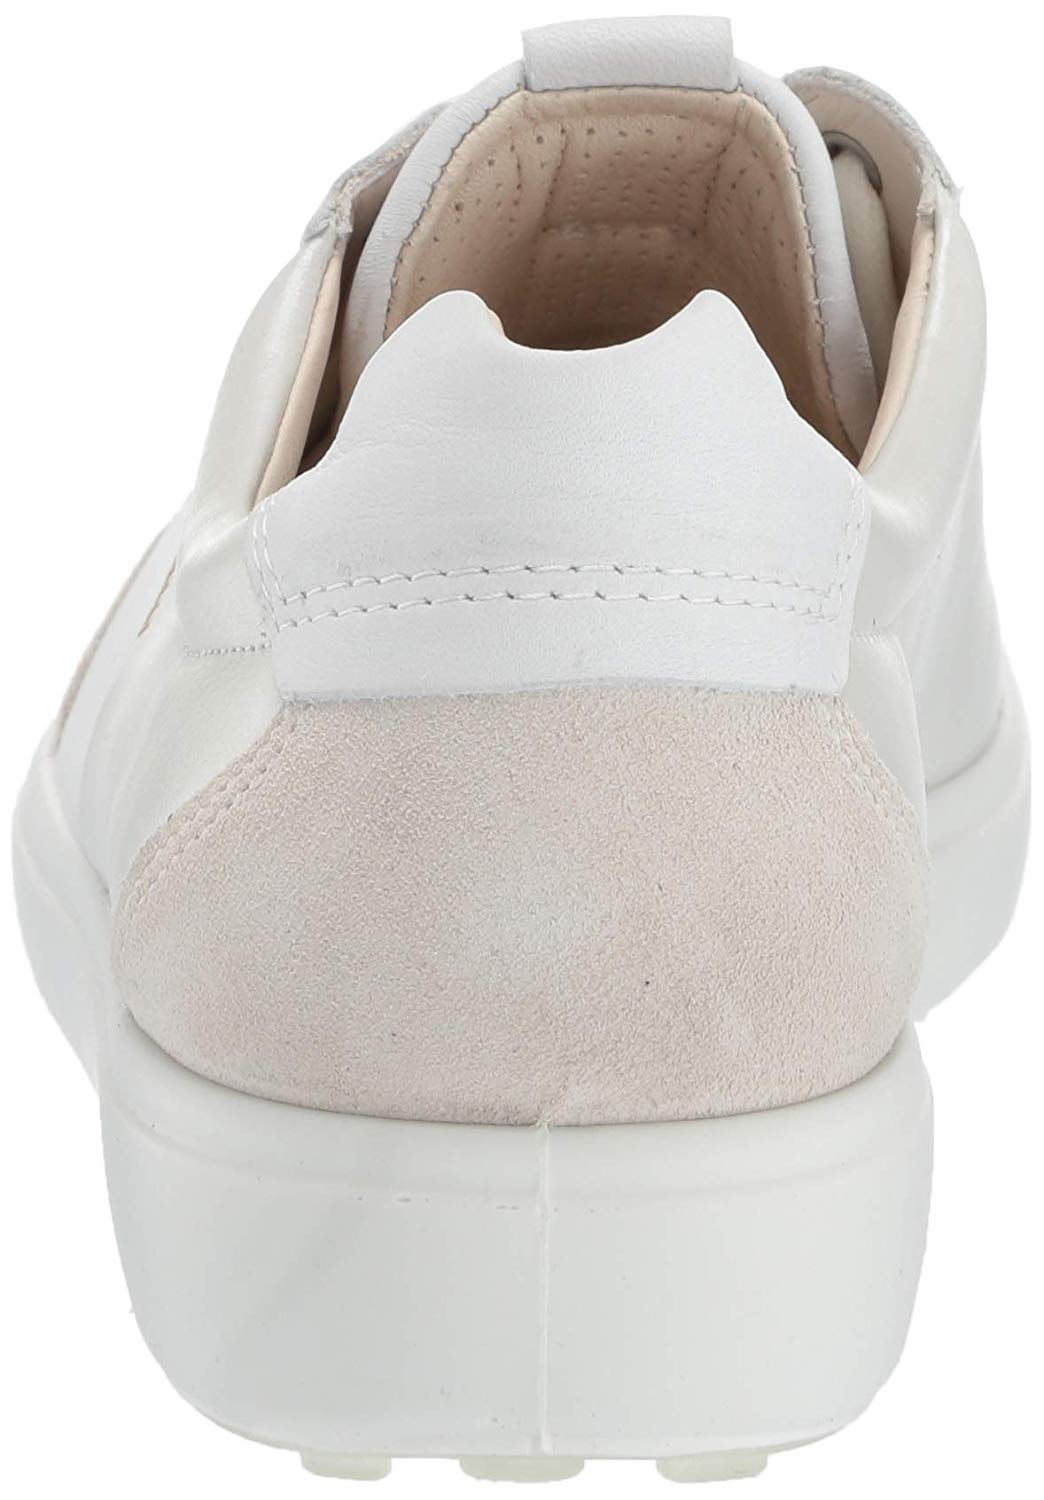 ECCO Women's Soft 7 Leisure Sneaker, White, Size 8.0 Cvru | eBay